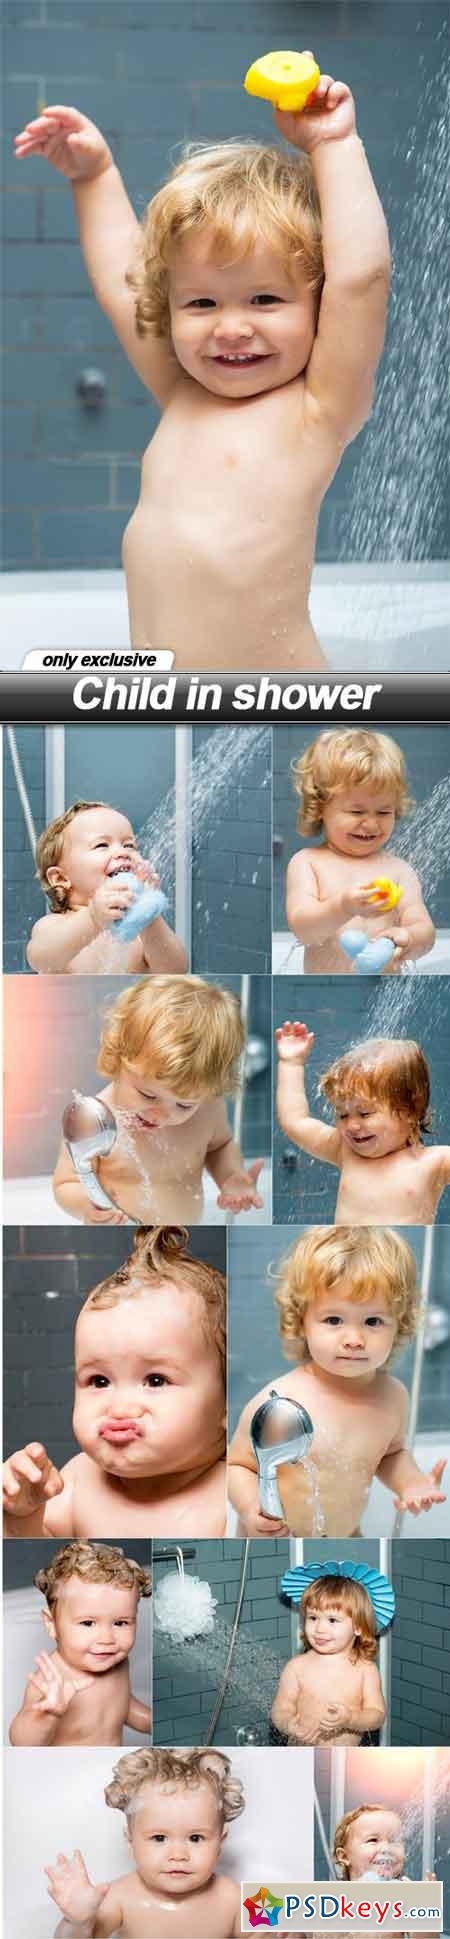 Child in shower - 11 UHQ JPEG